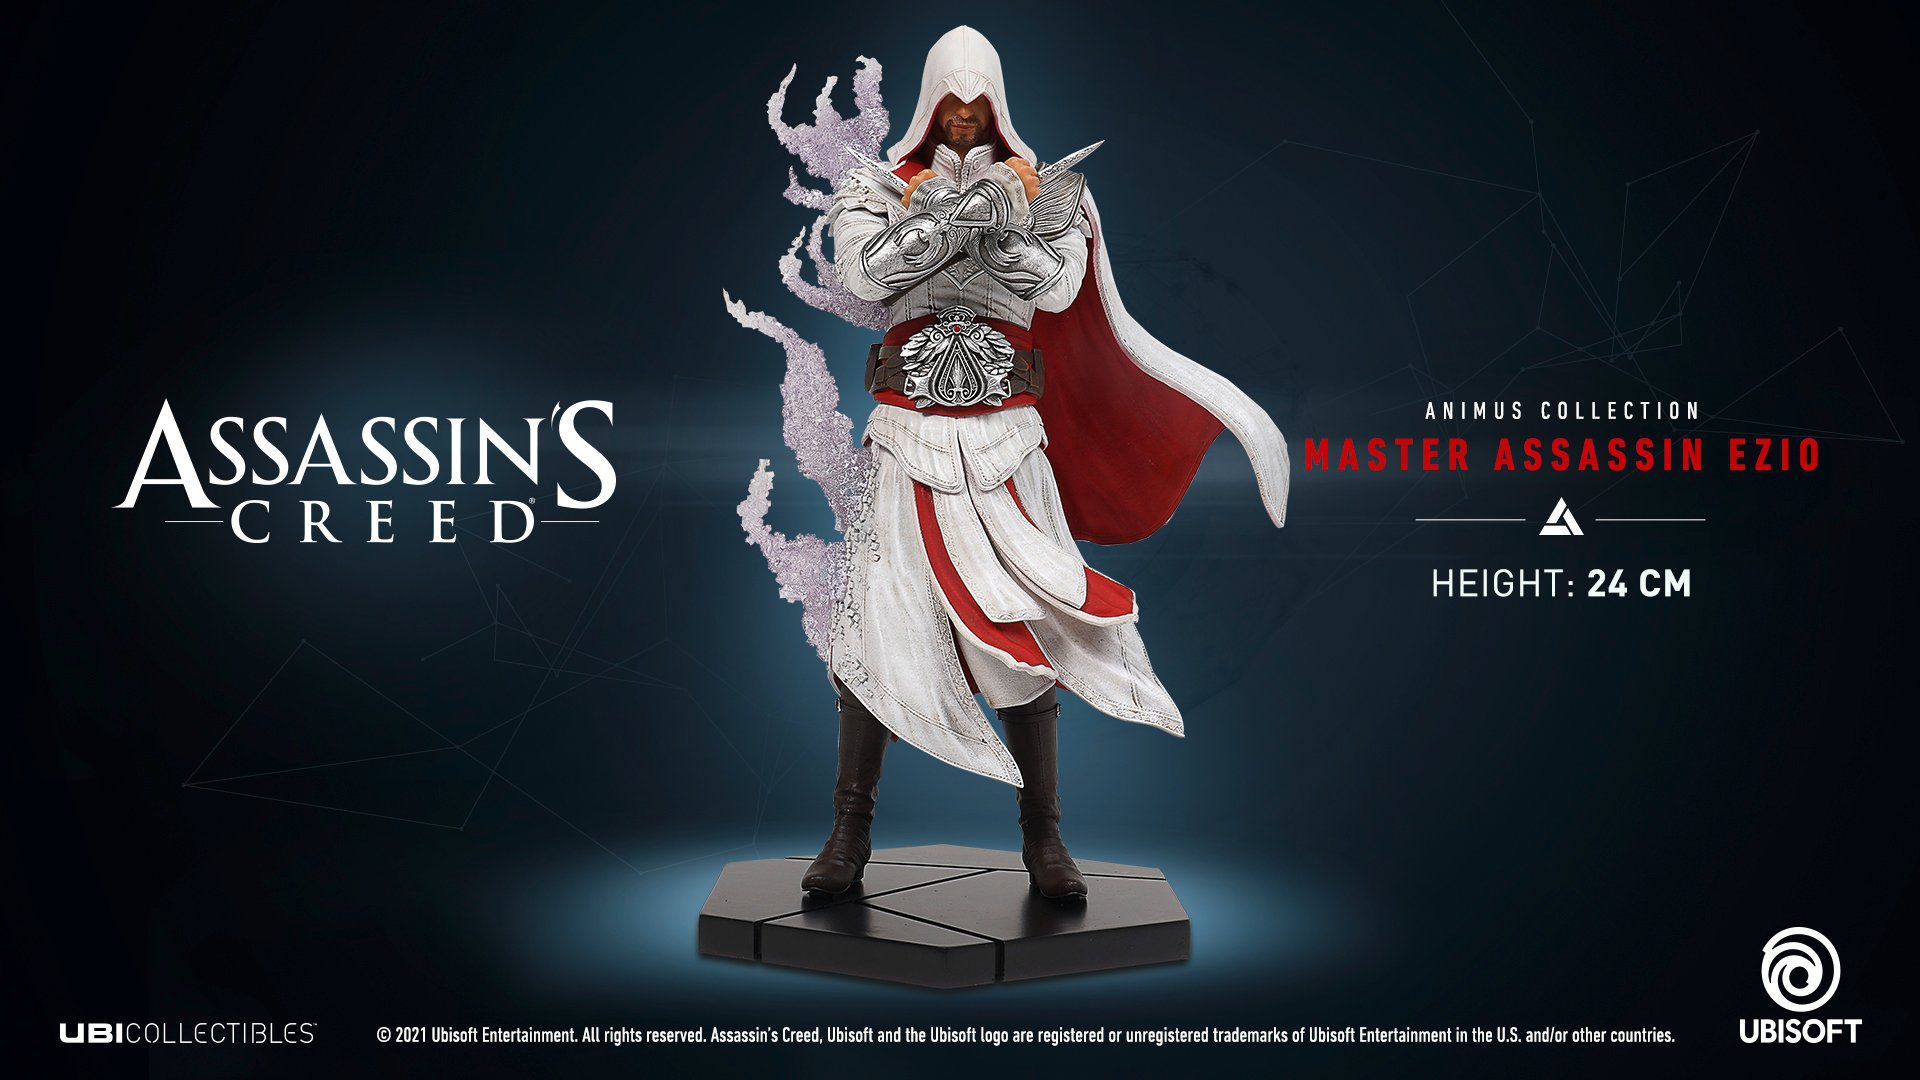 Assassin’s Creed Master Assassin Ezio - Animus Collection